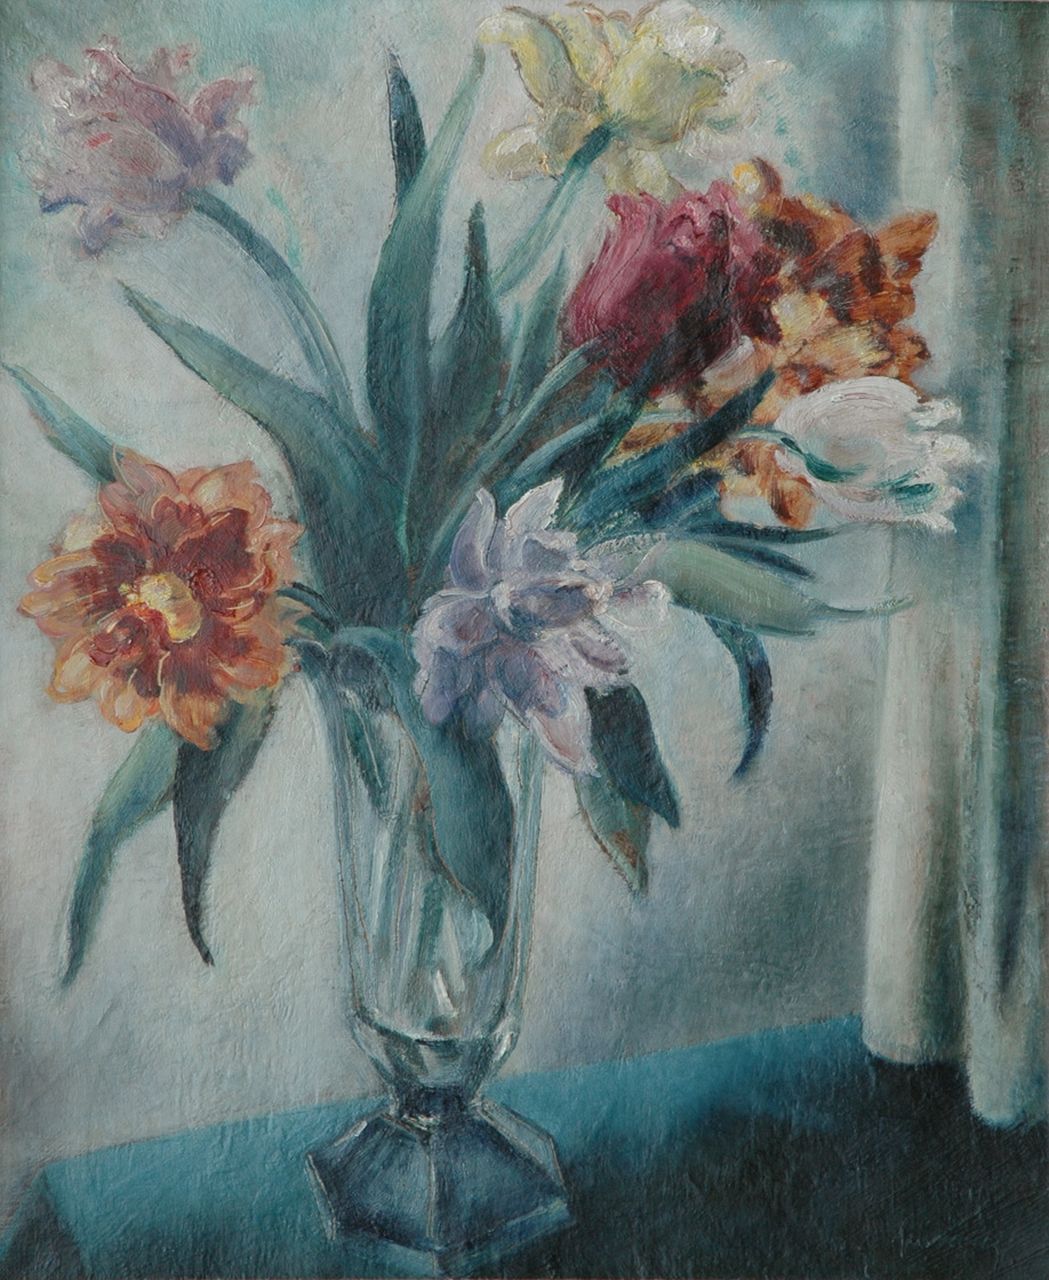 Schwarz S.  | Samuel 'Mommie' Schwarz, Tulips in a glass vase, oil on canvas 55.0 x 46.1 cm, signed l.r.